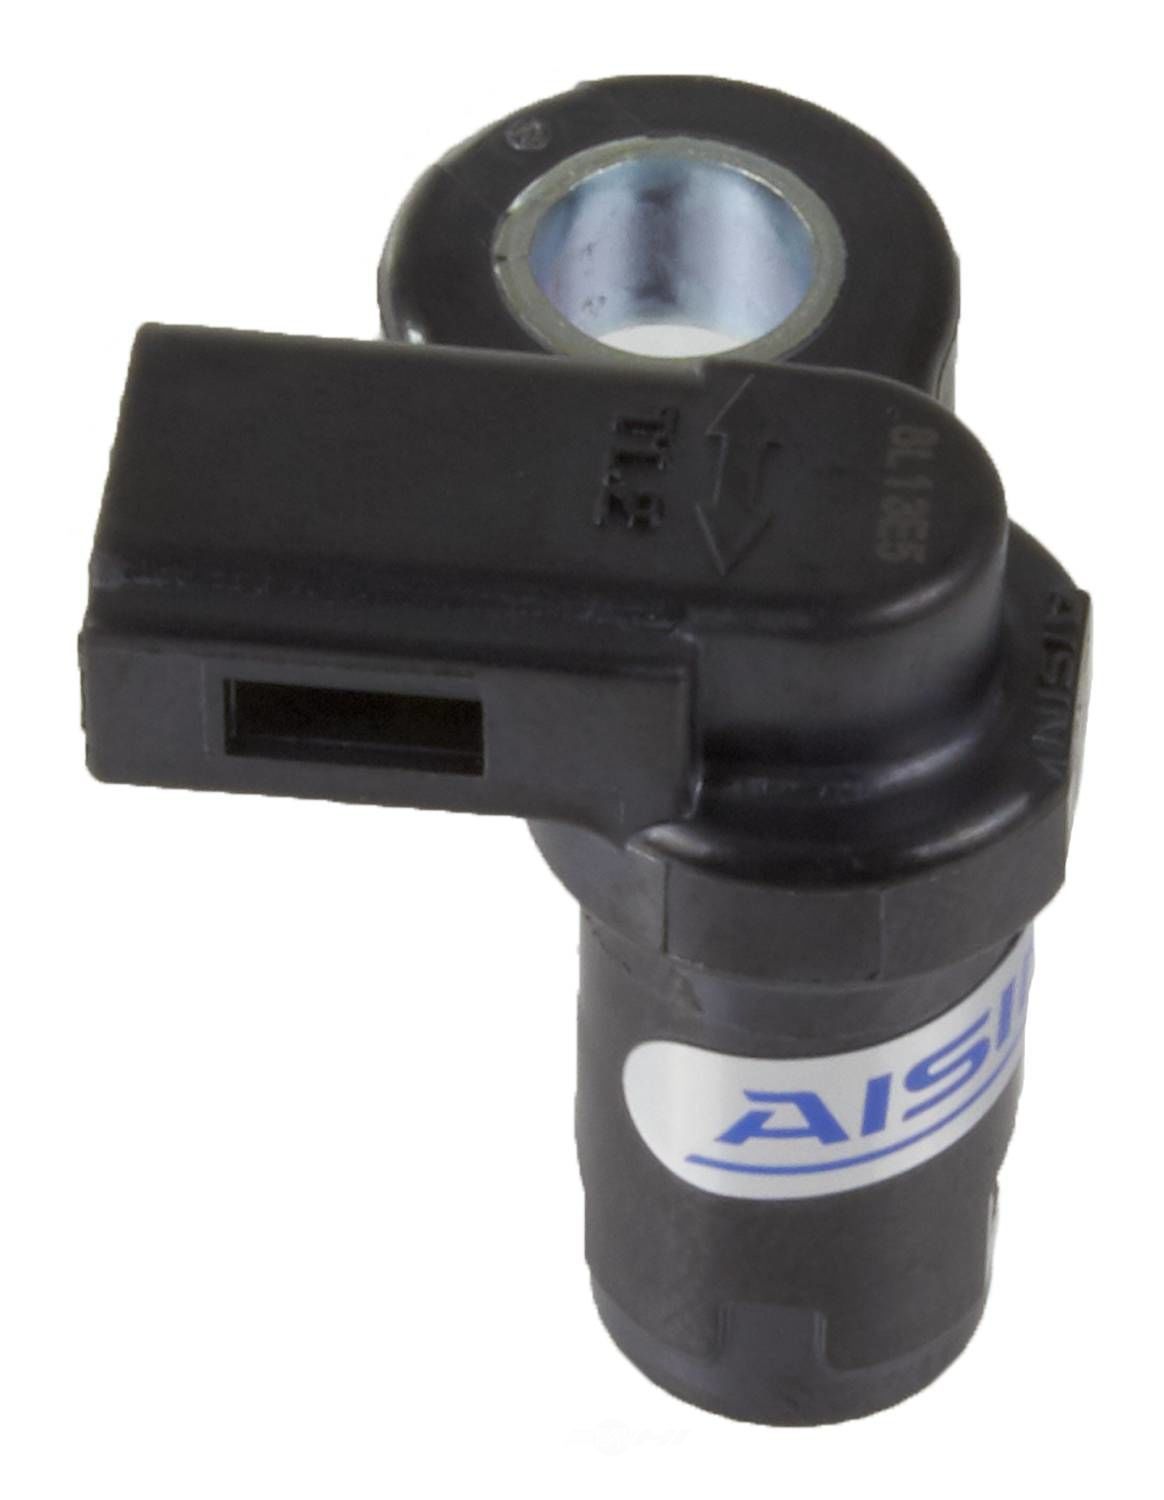 AISIN WORLD CORP OF AMERICA - Automatic Transmission Revolution Sensor - AIS RST-003-1